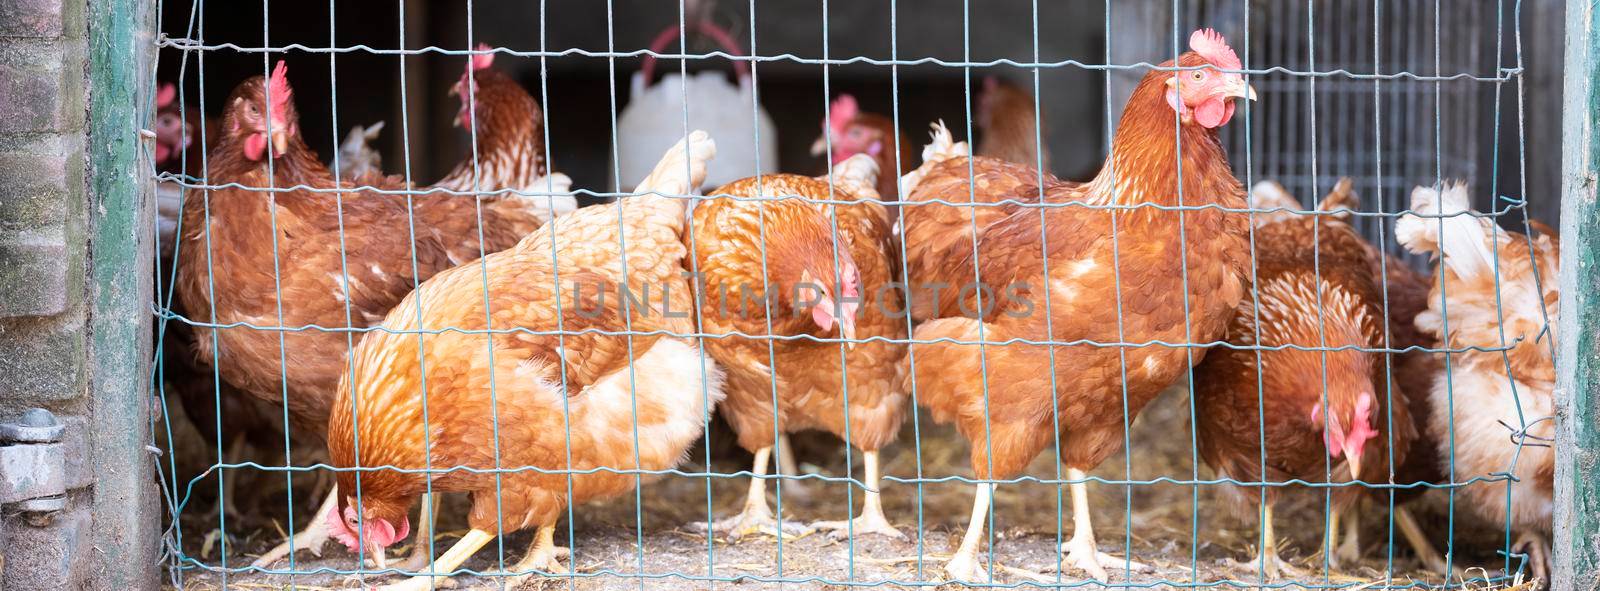 brown chickens behind fence on farm by ahavelaar